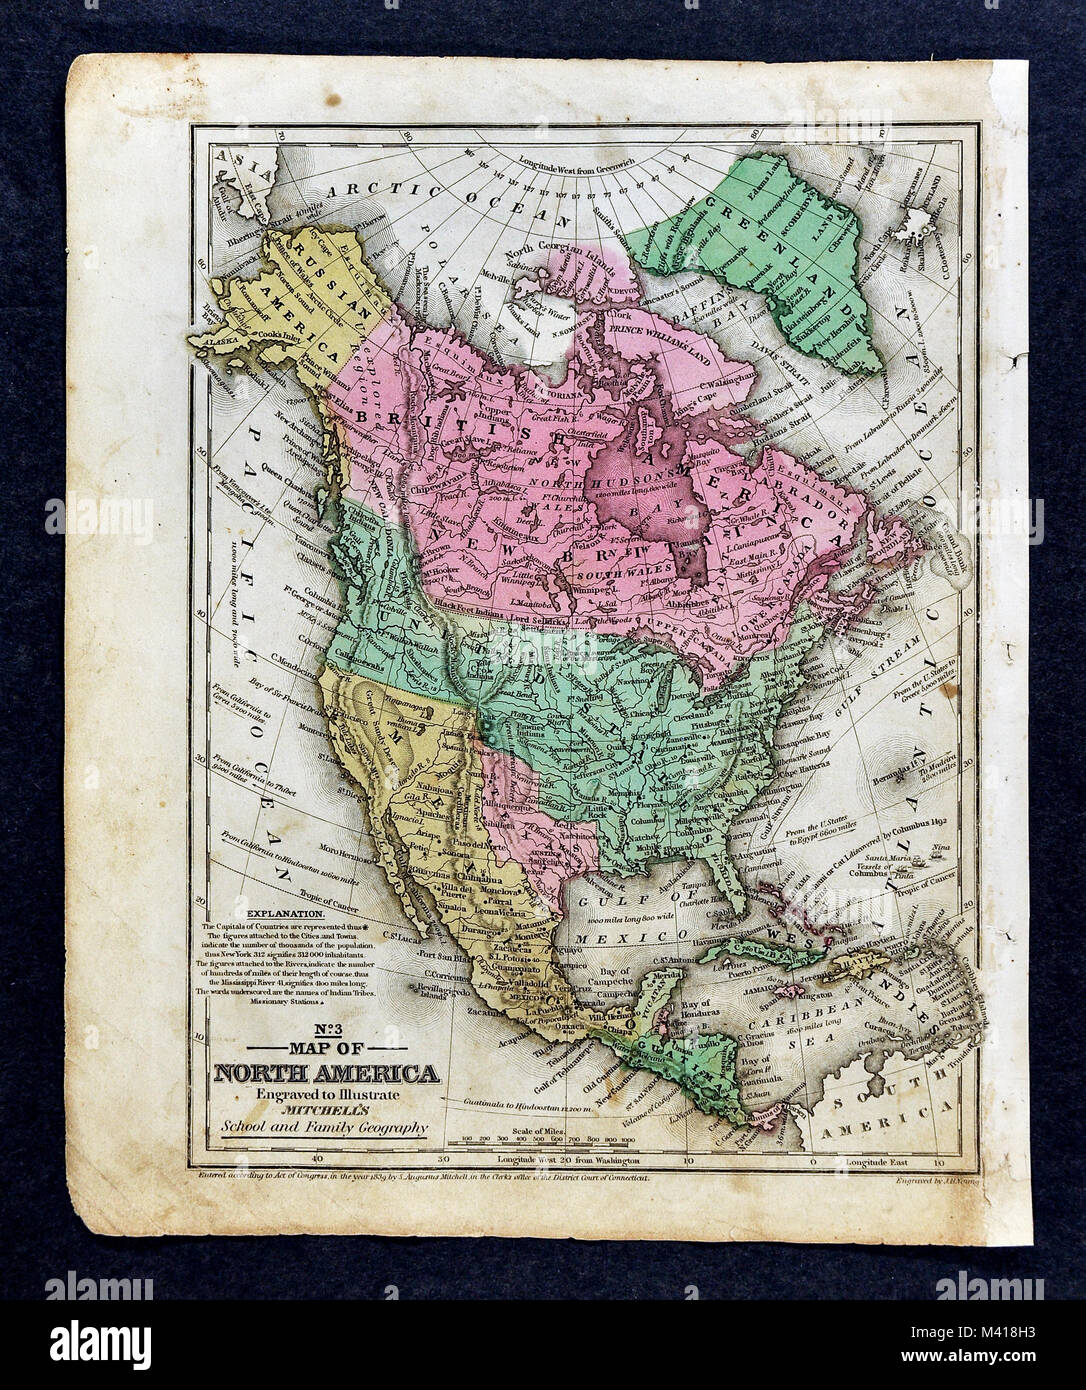 1839 Mitchell Map - North America - United States - Republic of Texas - New Albion California - Mexico Canada Russian Alaska Stock Photo